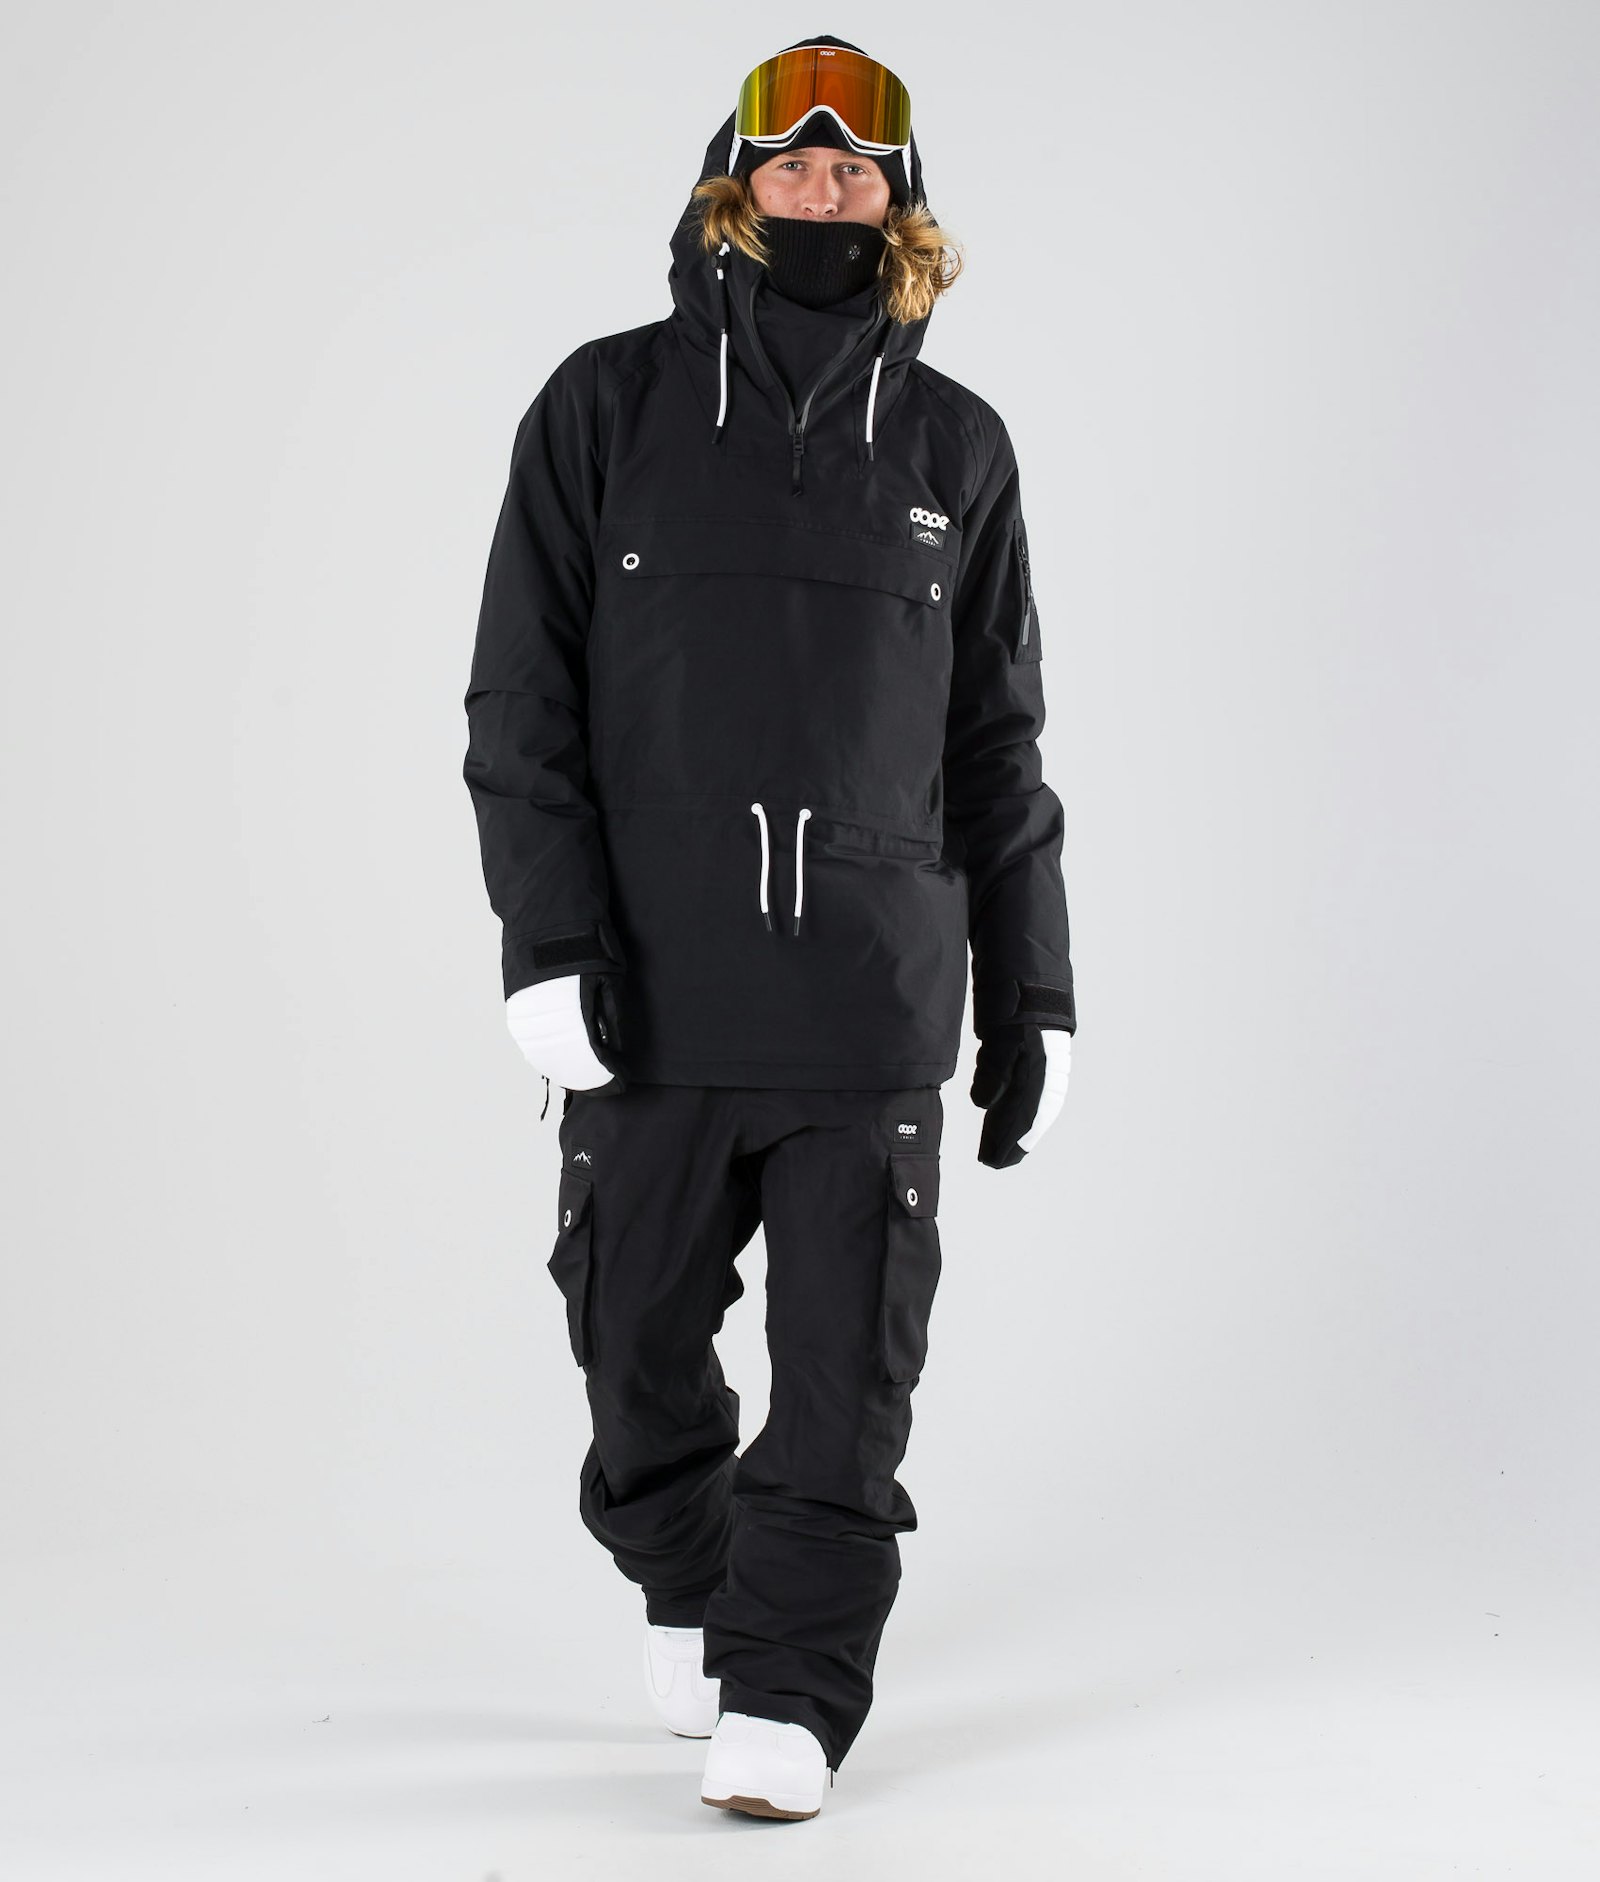 Annok 2019 Snowboard Jacket Men Black